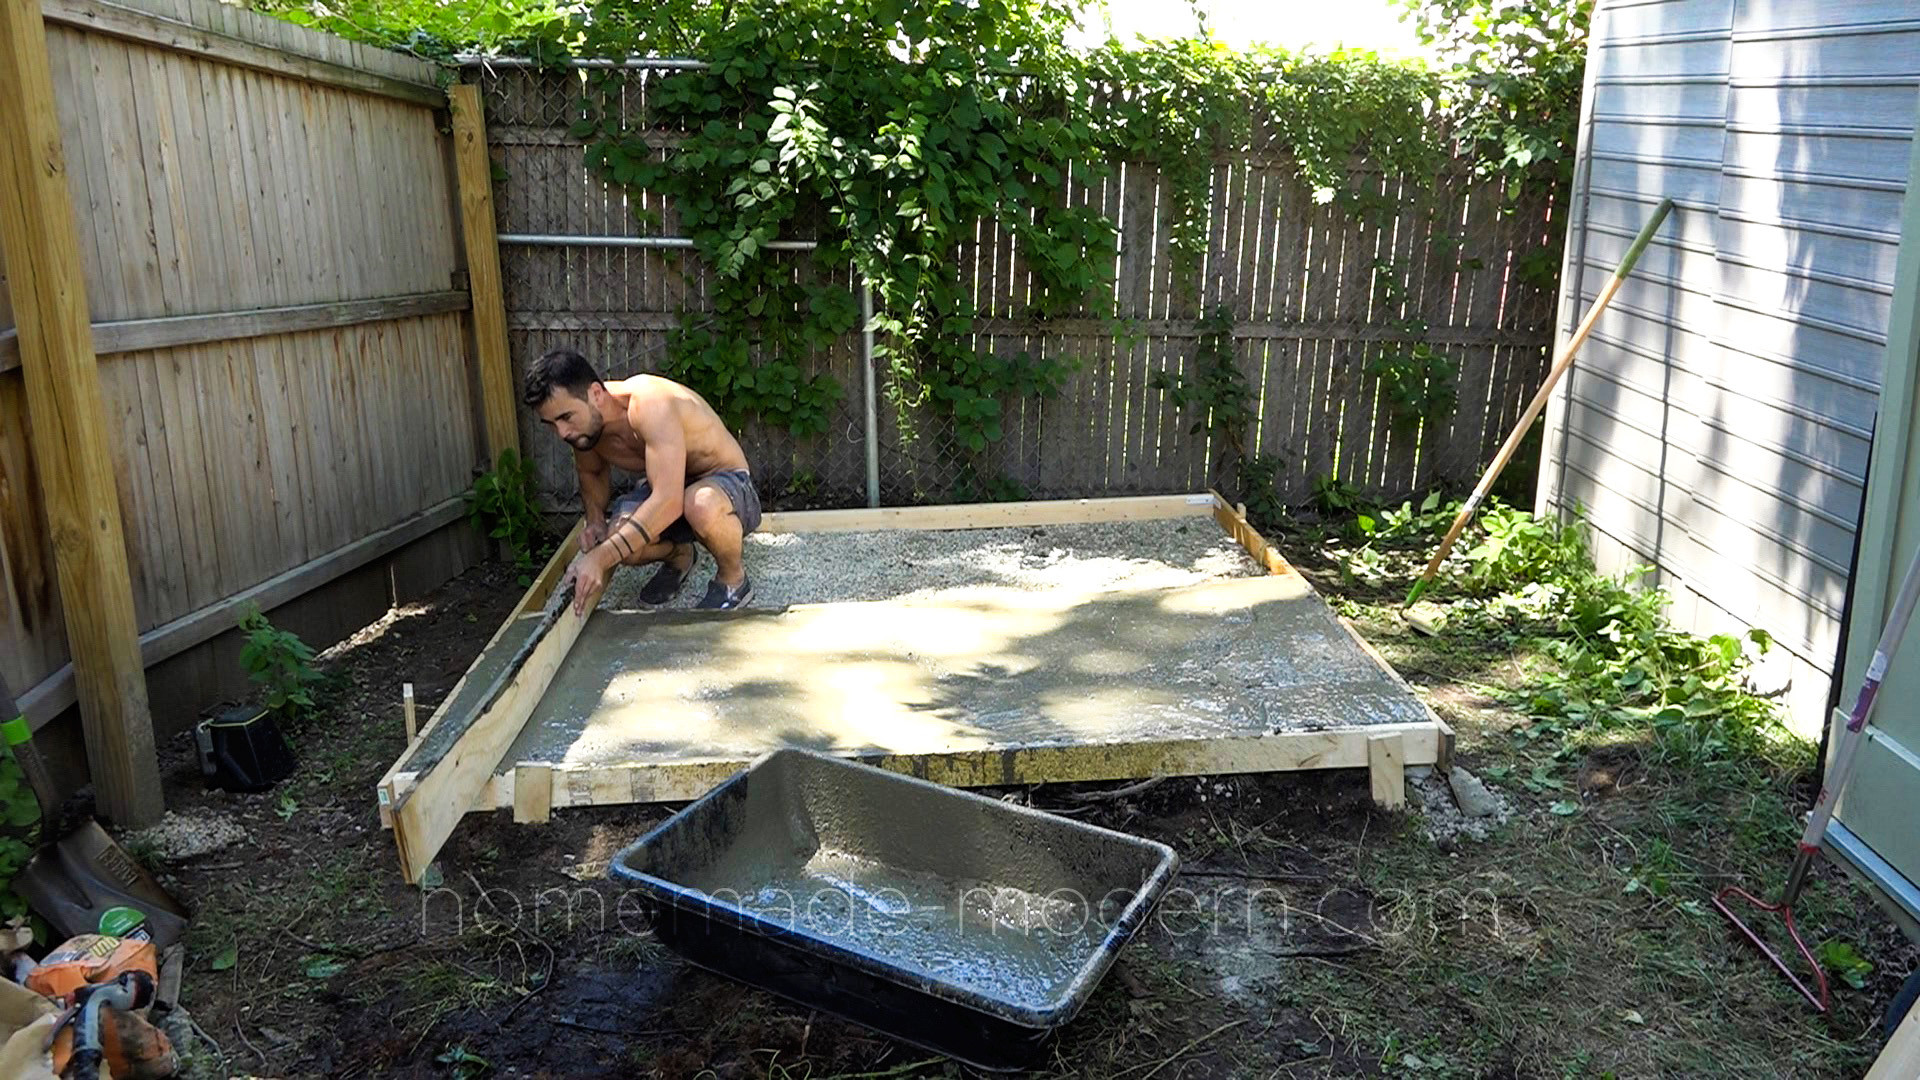 Best ideas about DIY Concrete Slab
. Save or Pin HomeMade Modern Blog DIY Concrete Slab Foundation Now.